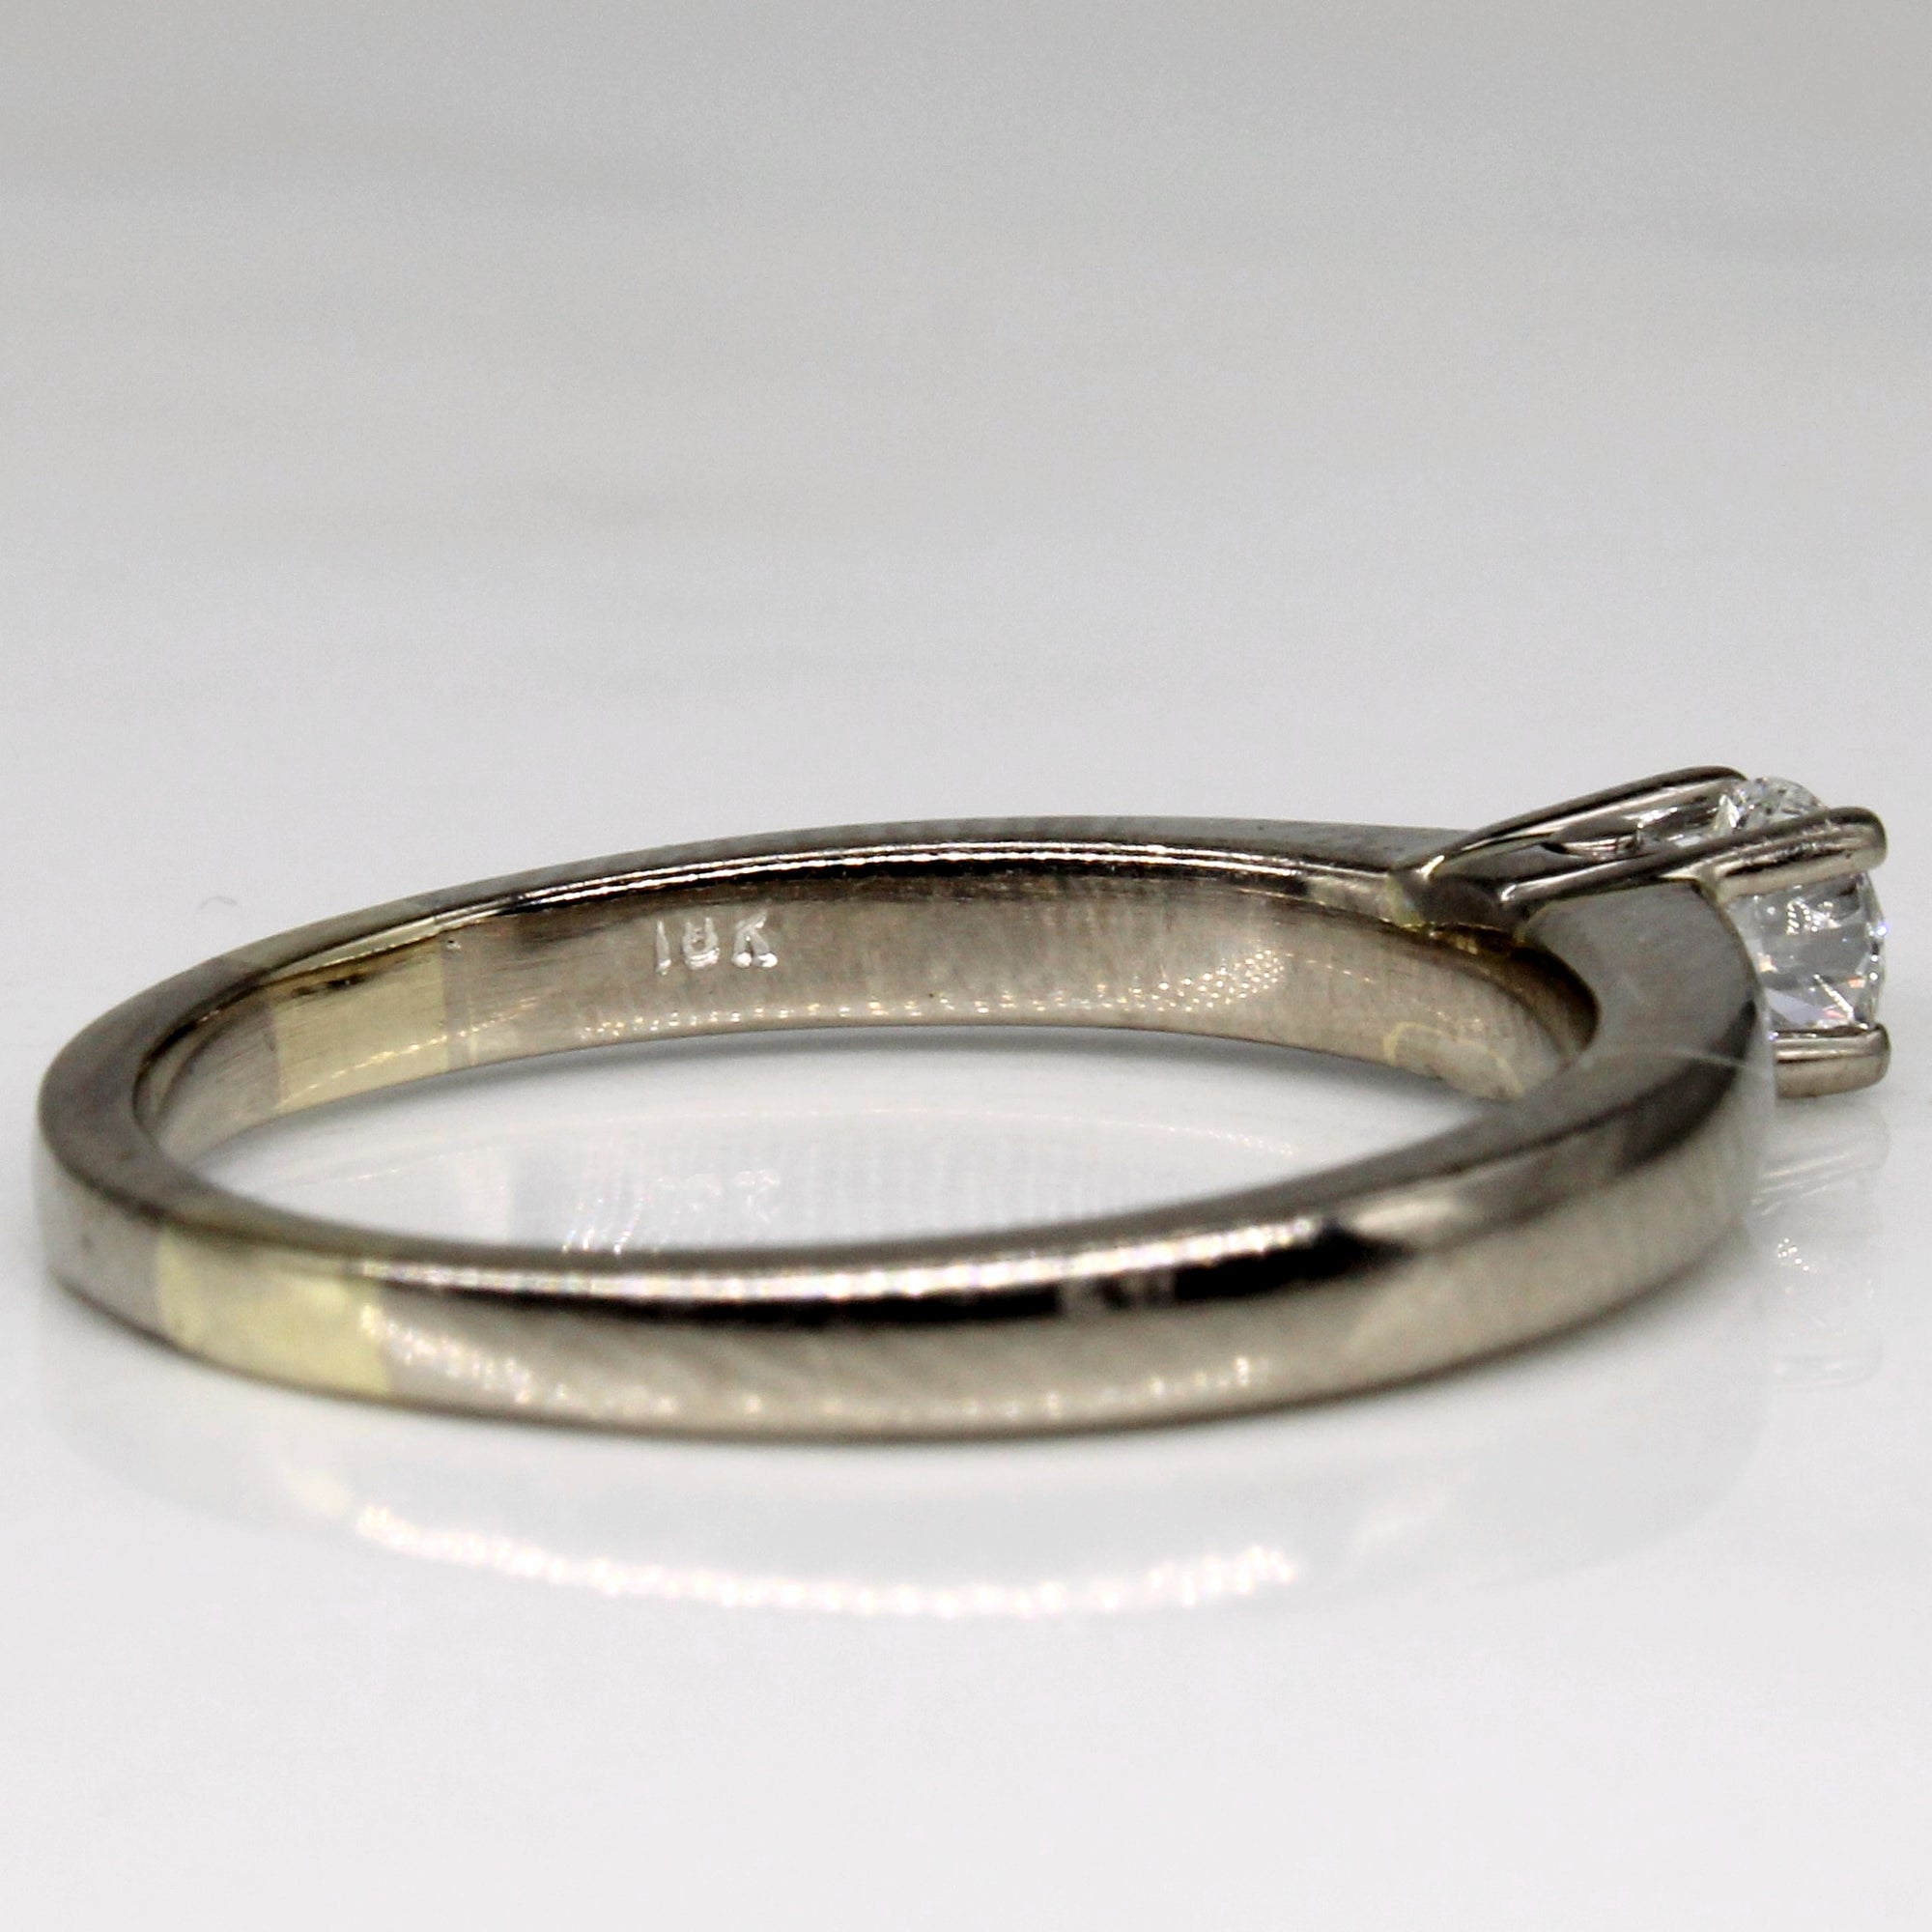 Diamond Solitaire with Hidden Sapphire 10k Ring | 0.22ctw, 0.01 ctw | SZ 6.75 |